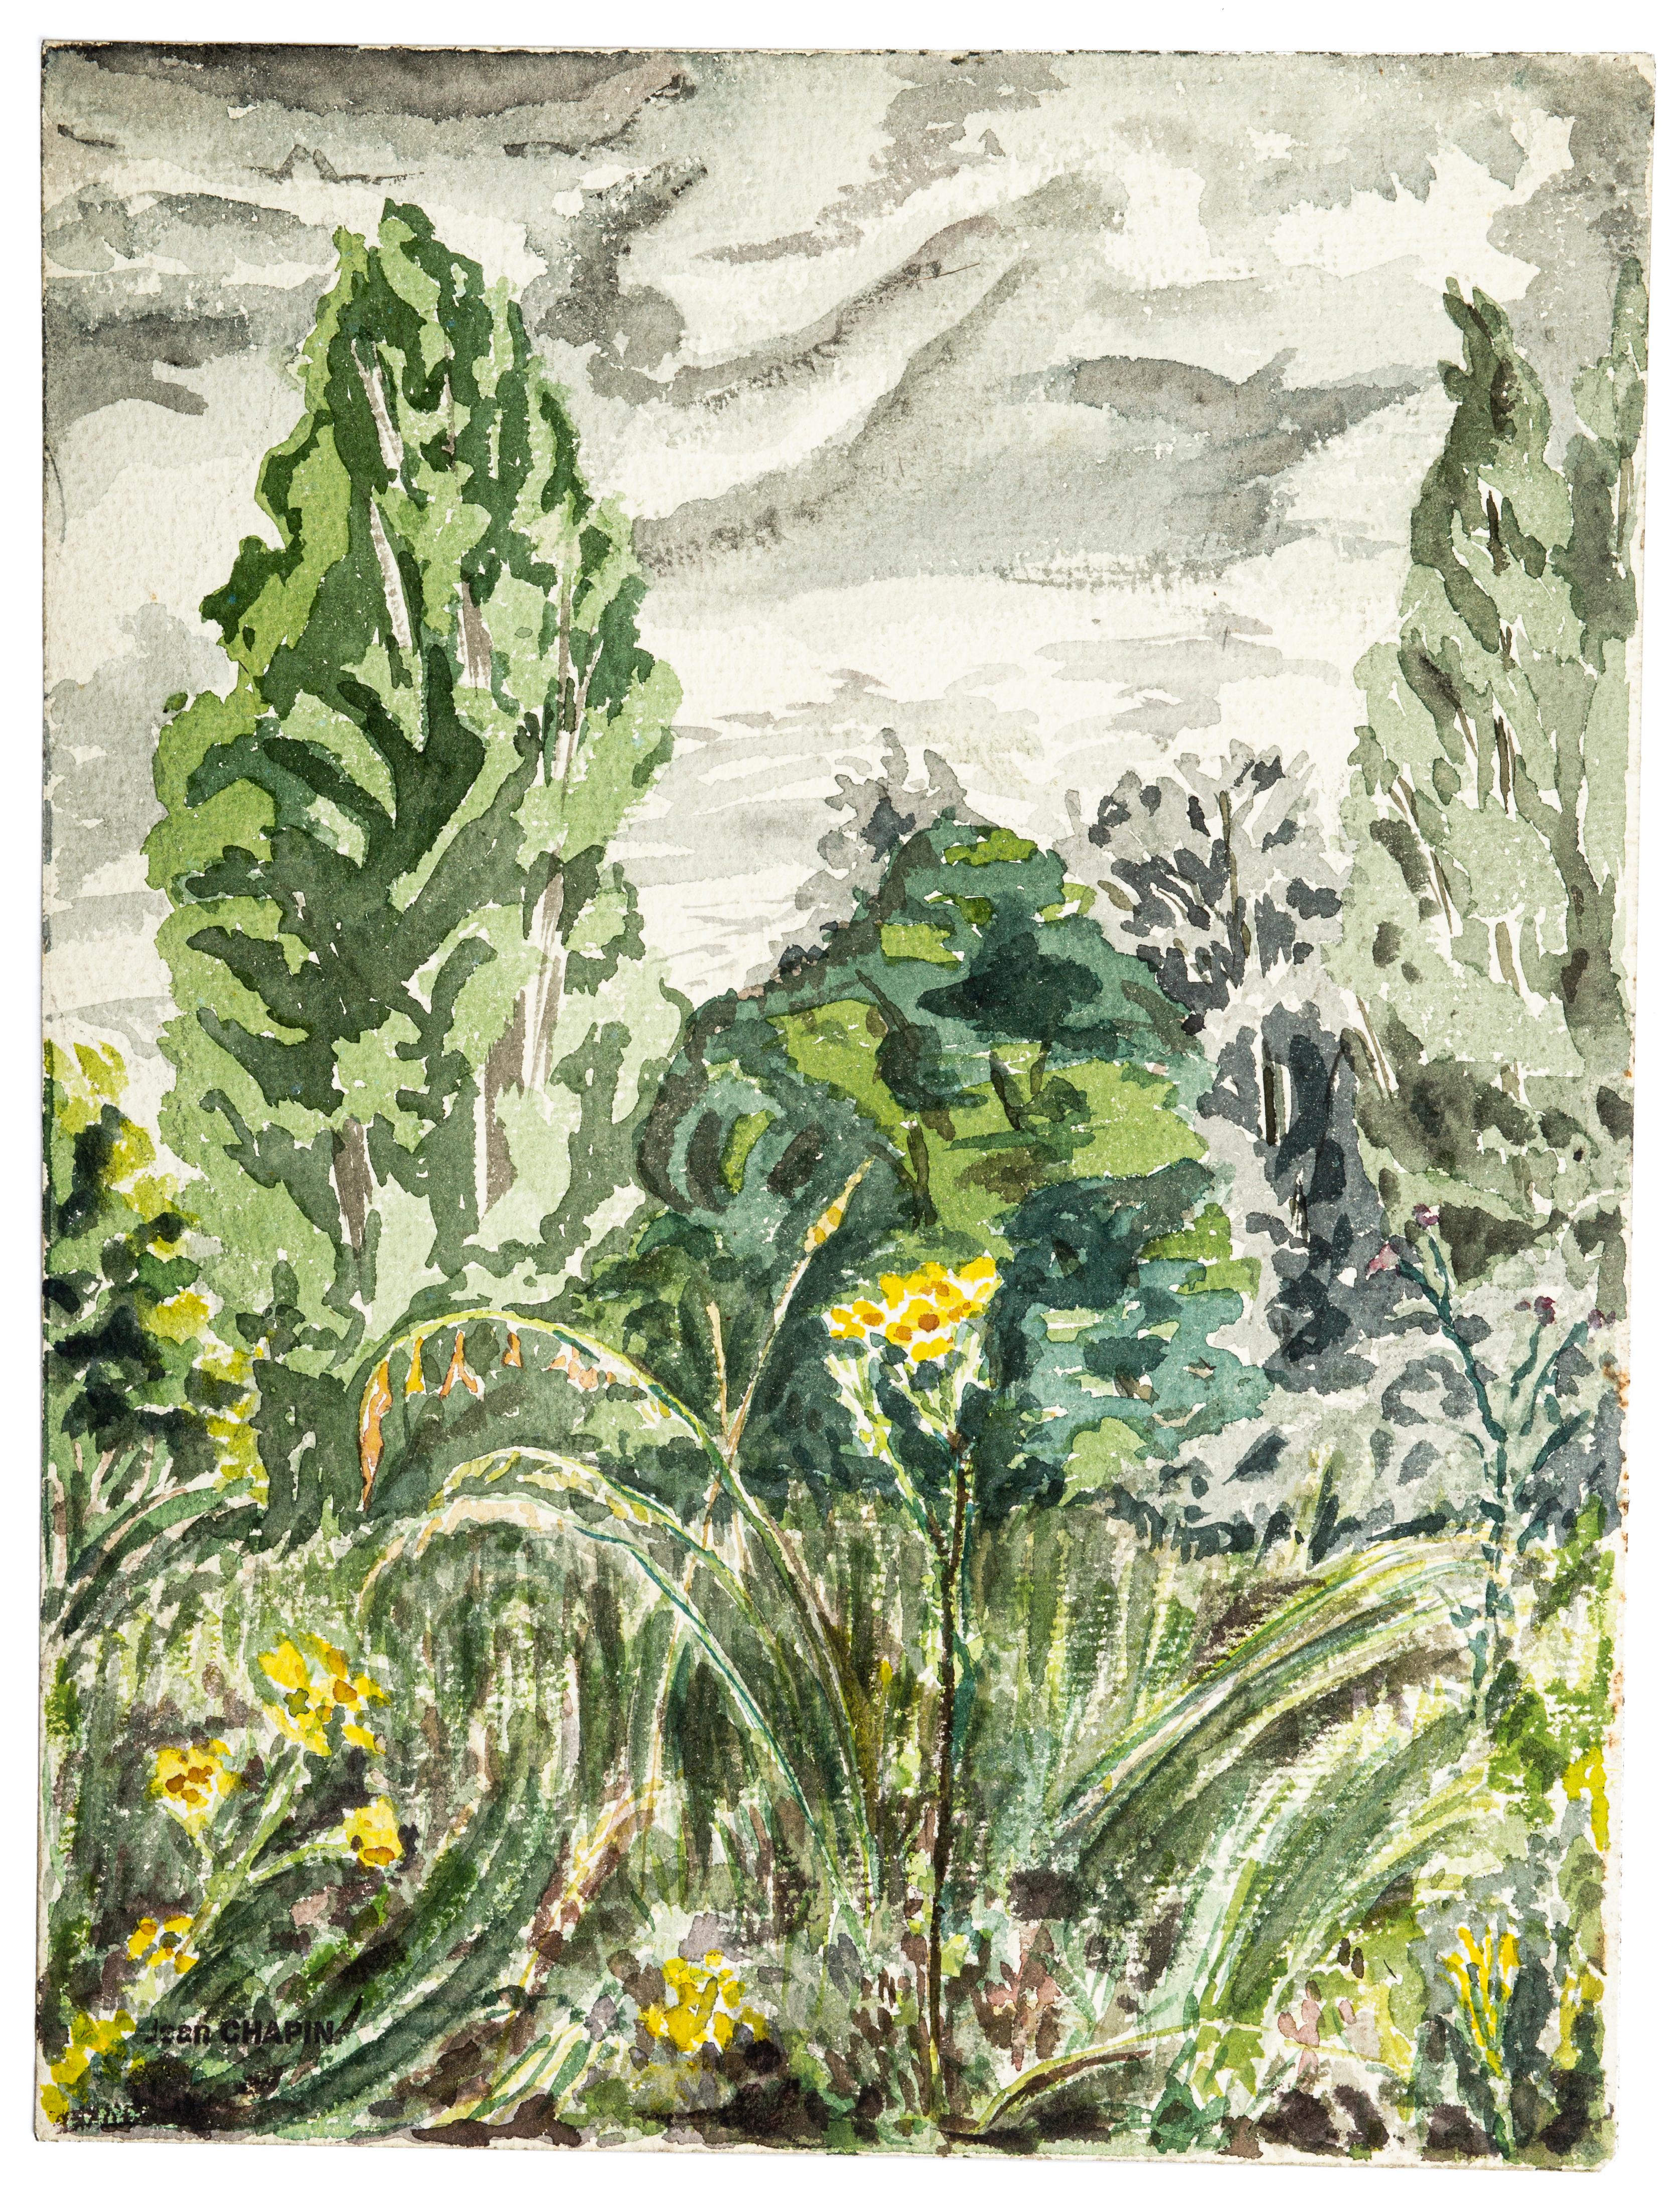 Green Landscape - Watercolor by Jean Chapin - 1920s